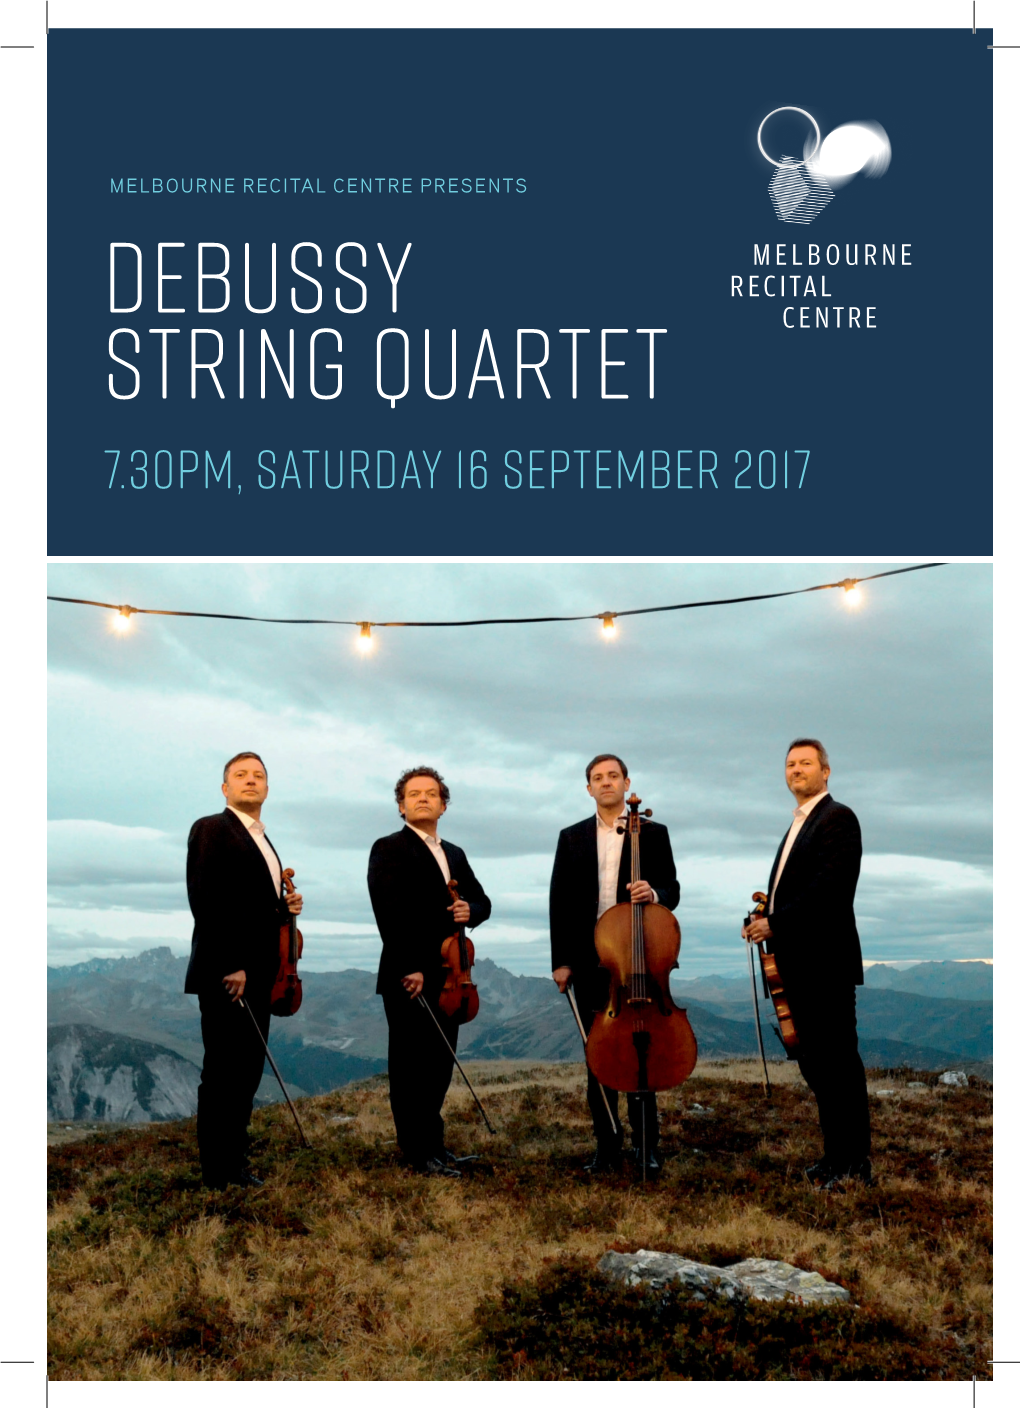 Debussy String Quartet 7.30Pm, Saturday 16 September 2017 Debussy String Quartet